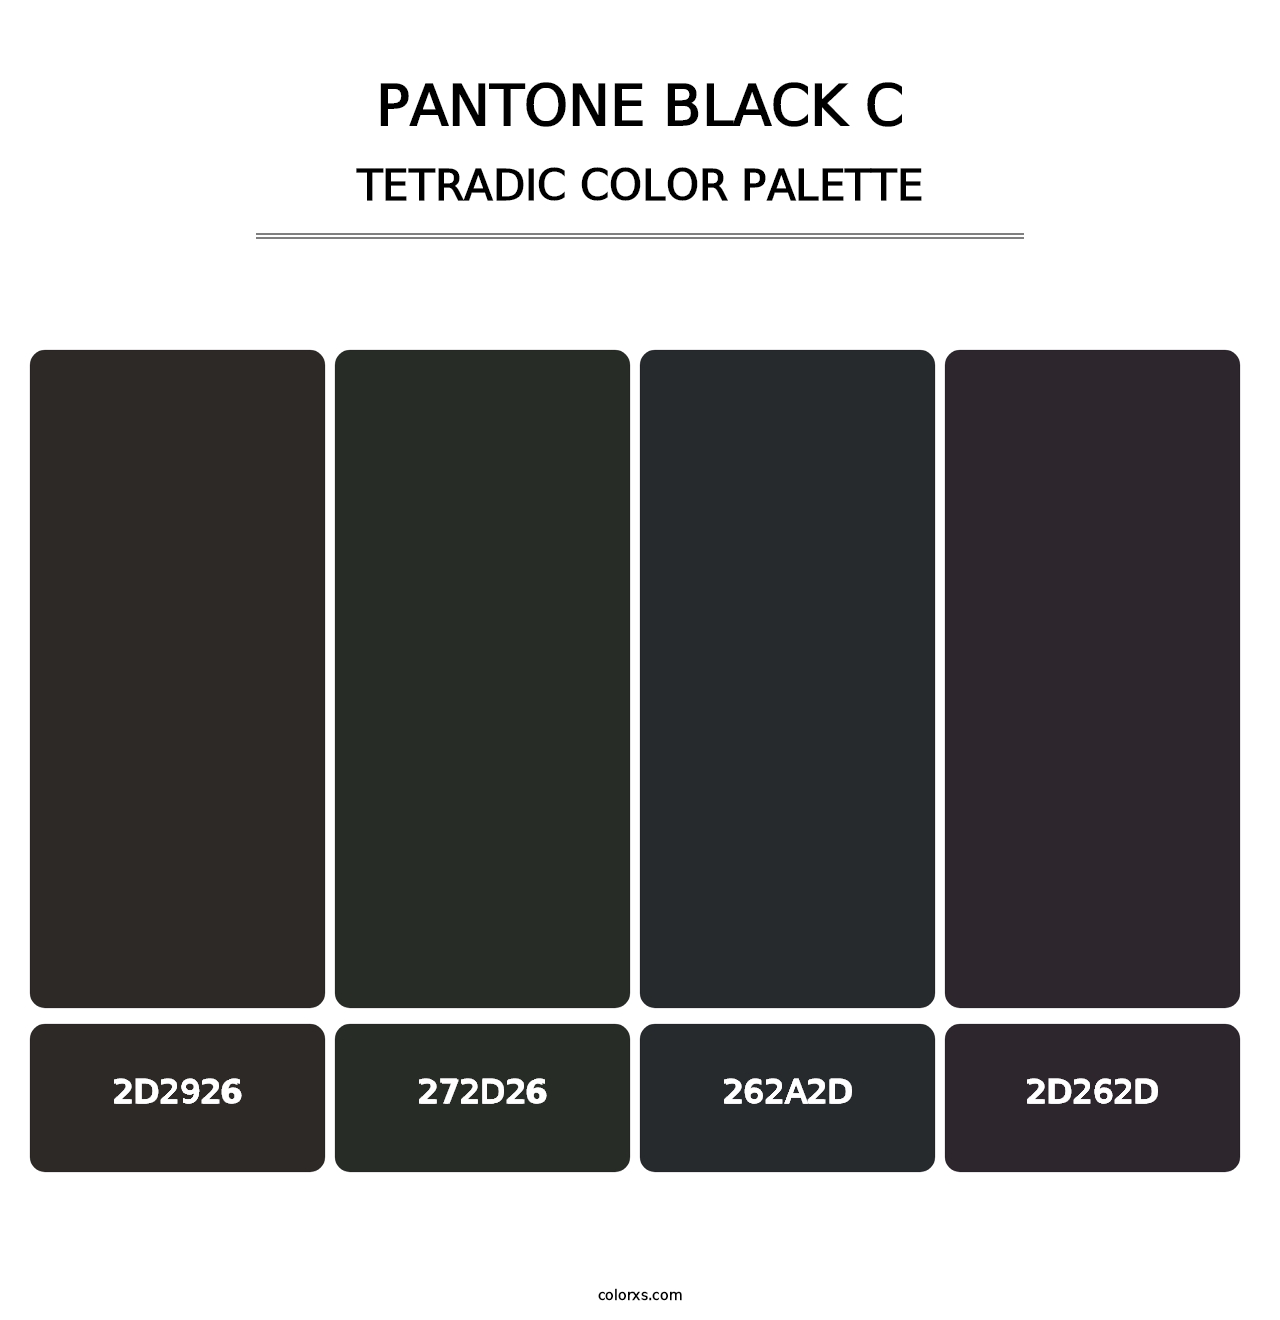 PANTONE Black C - Tetradic Color Palette